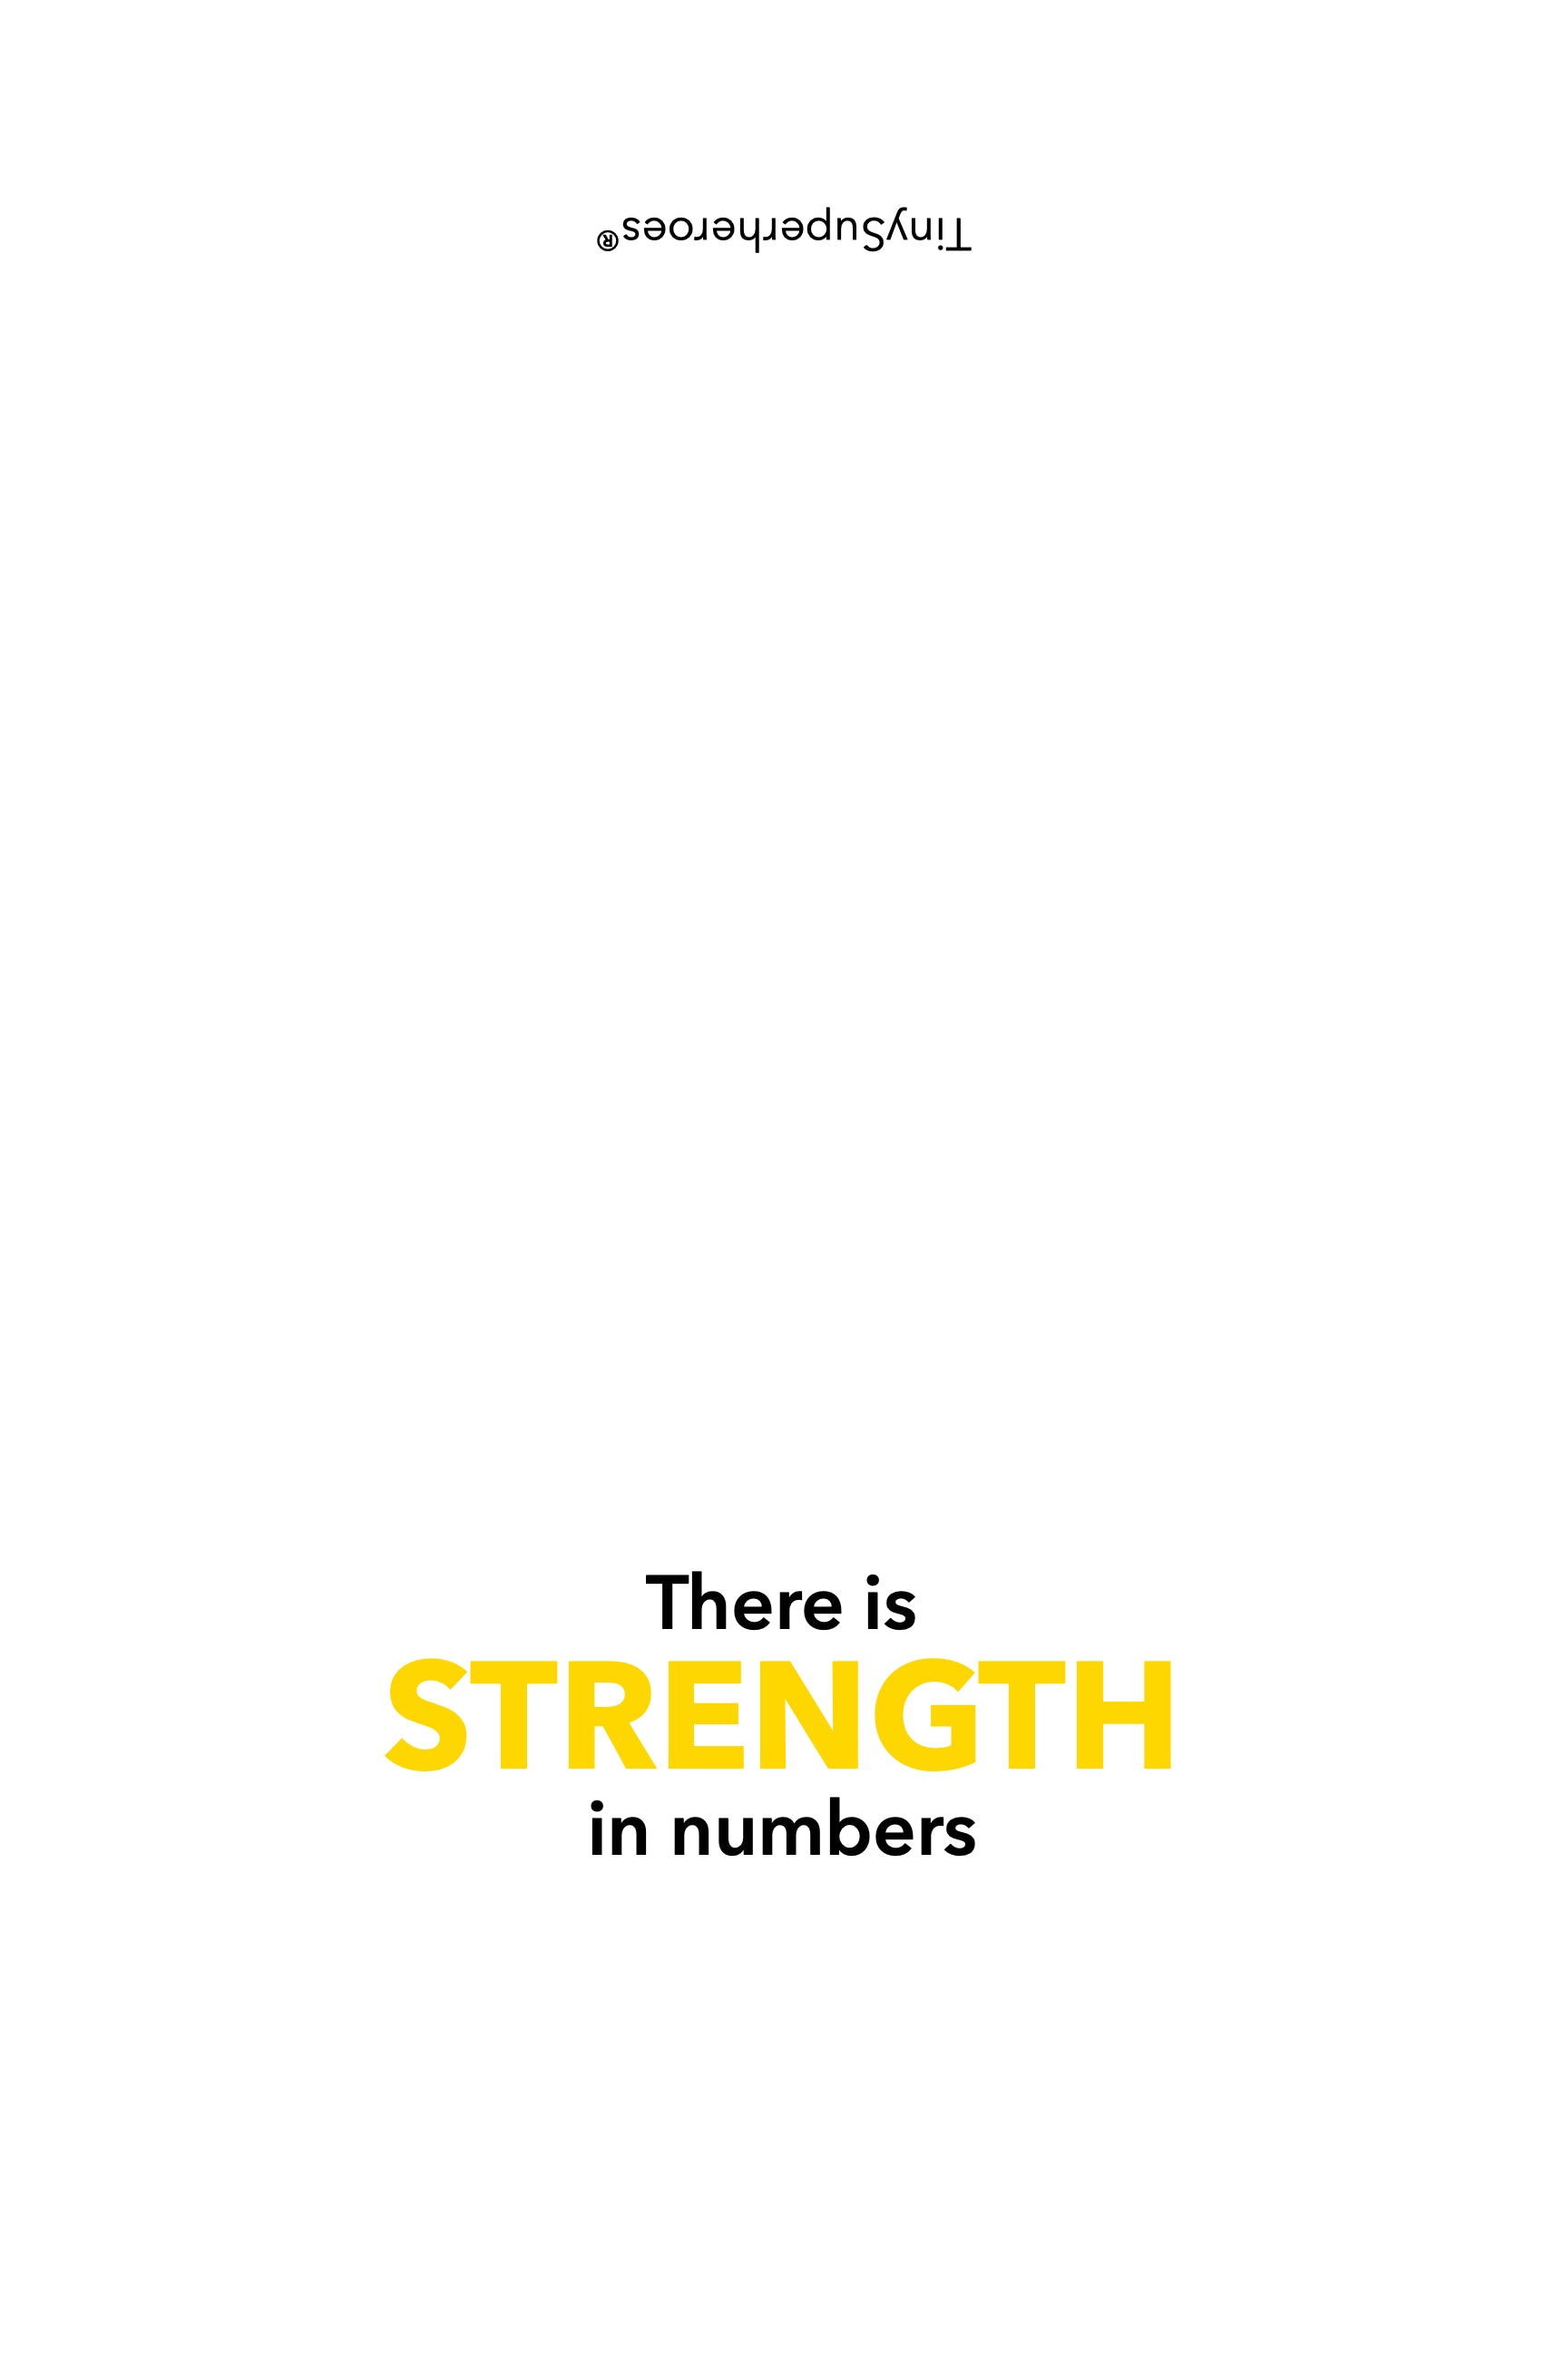 Strength Card - TinySuperheroes